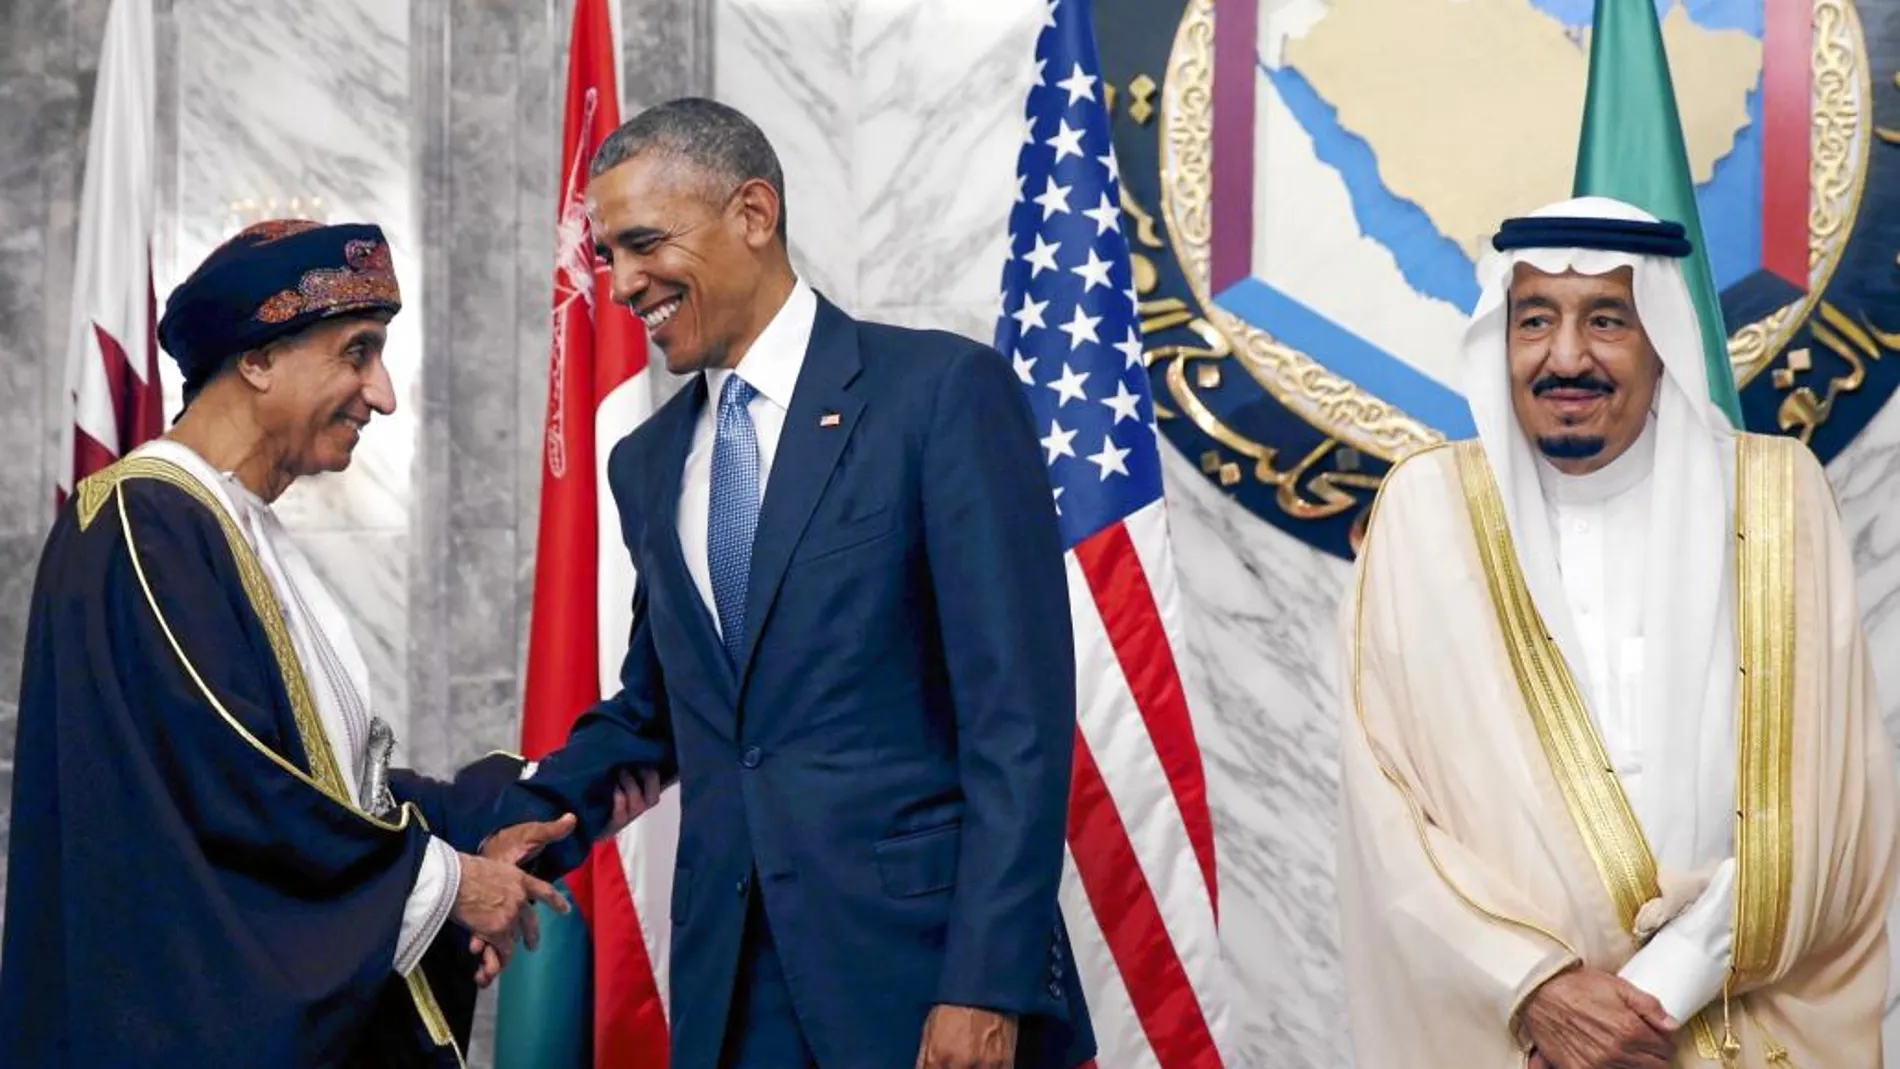 Obama saluda al viceprimer ministro saudí bajo la atenta mirada del rey Salman